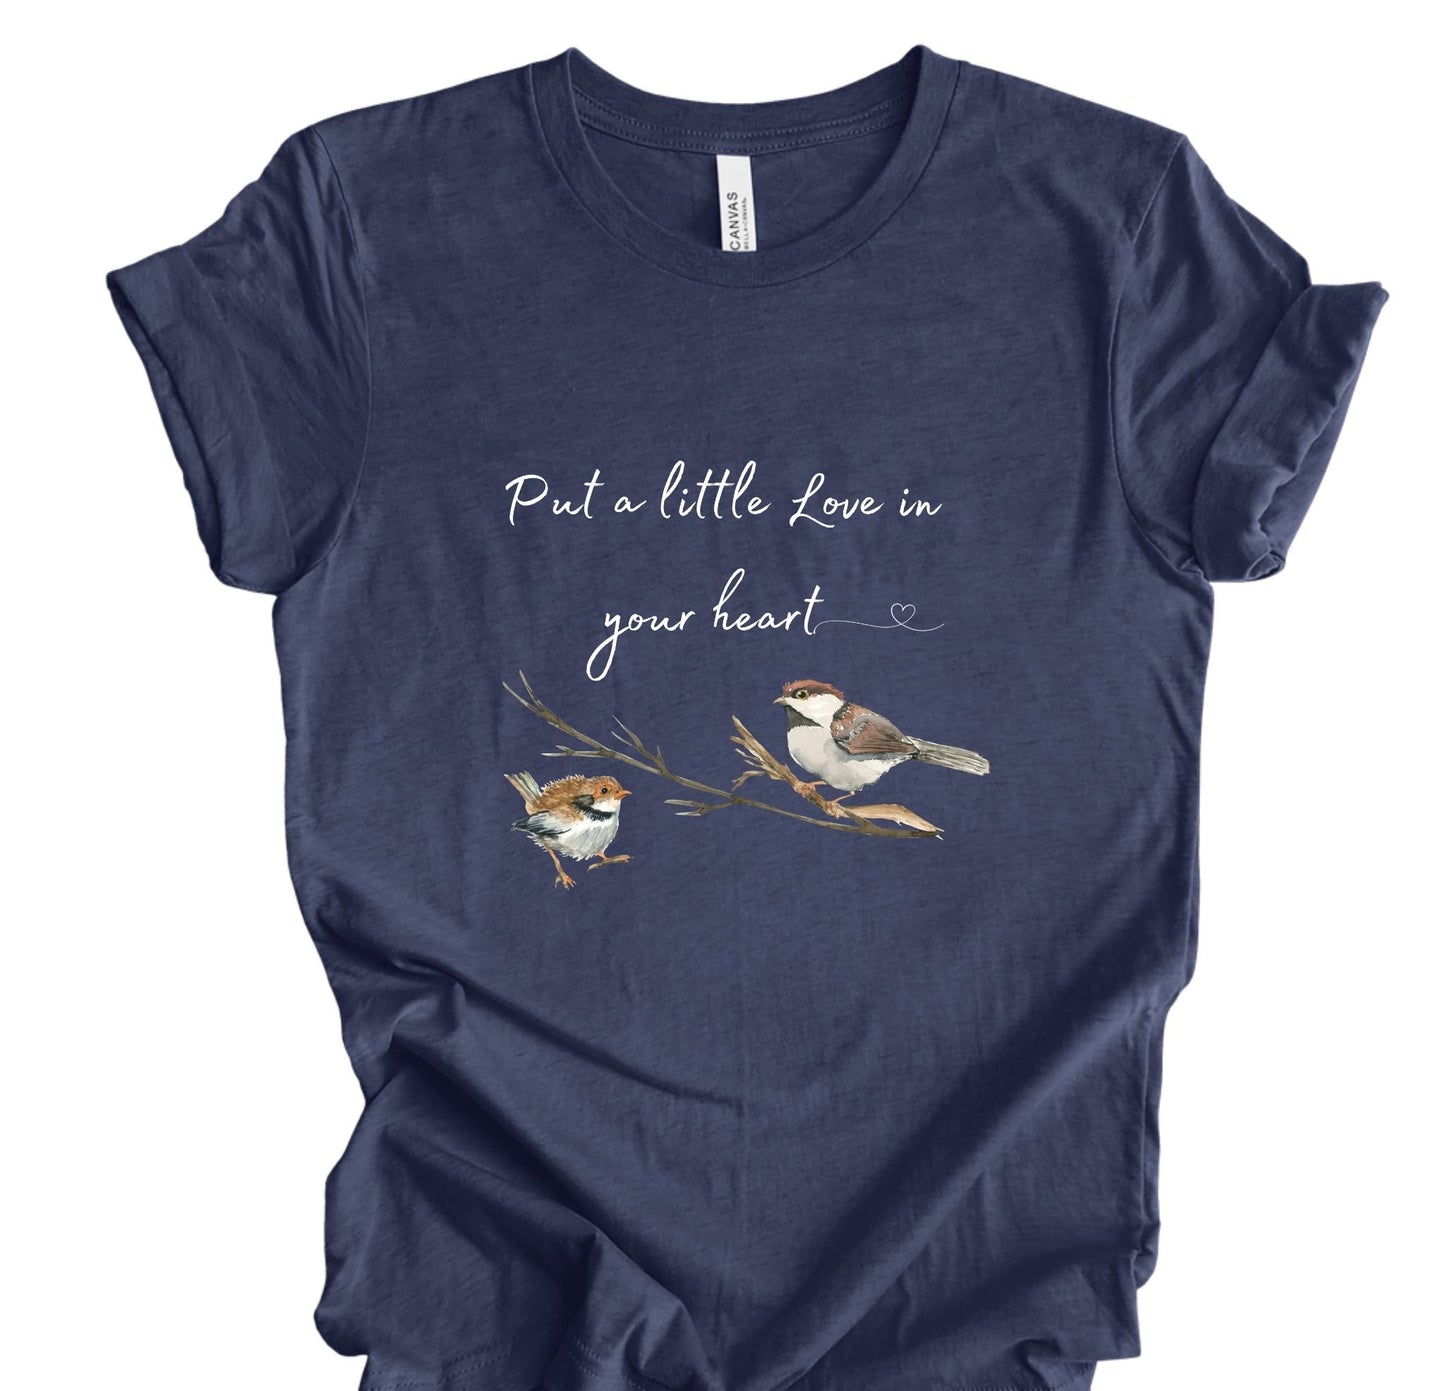 Watercolor Bird T Shirt Put A Little Love in your Heart!